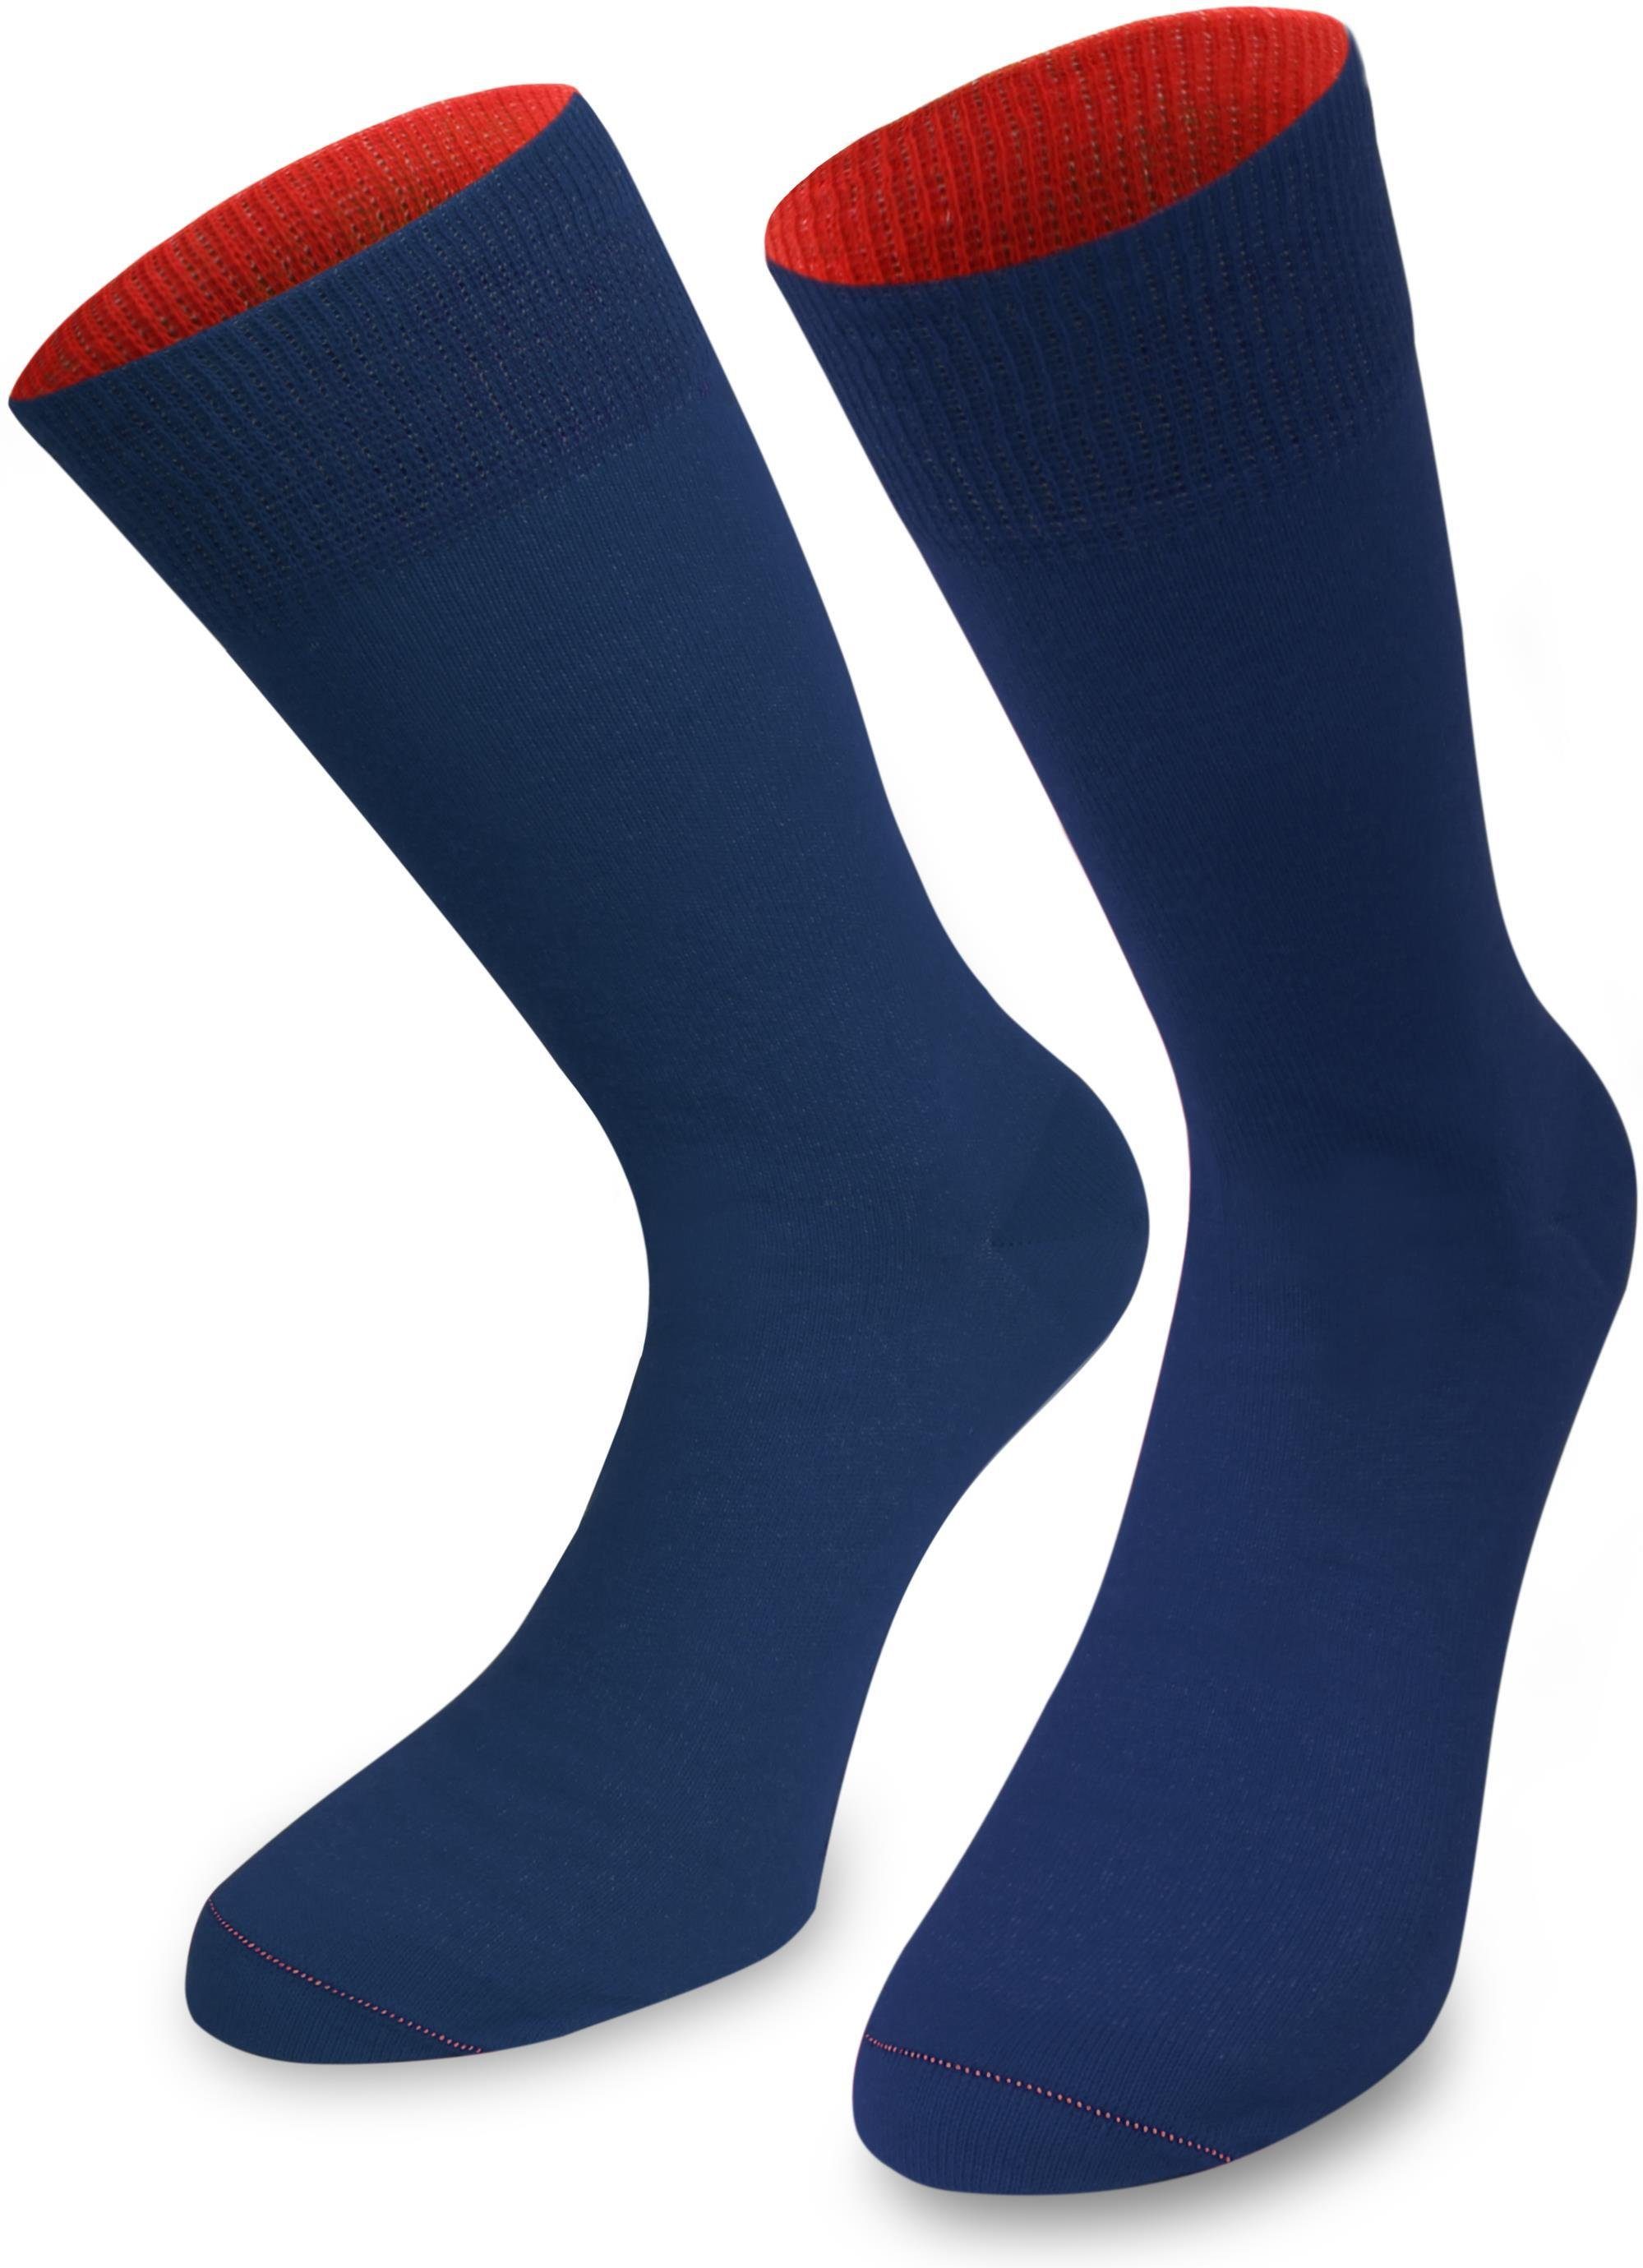 normani Basicsocken 1 Paar Socken Bi-Color (1 Paar) farbig abgesetzter Bund Marine/Rot